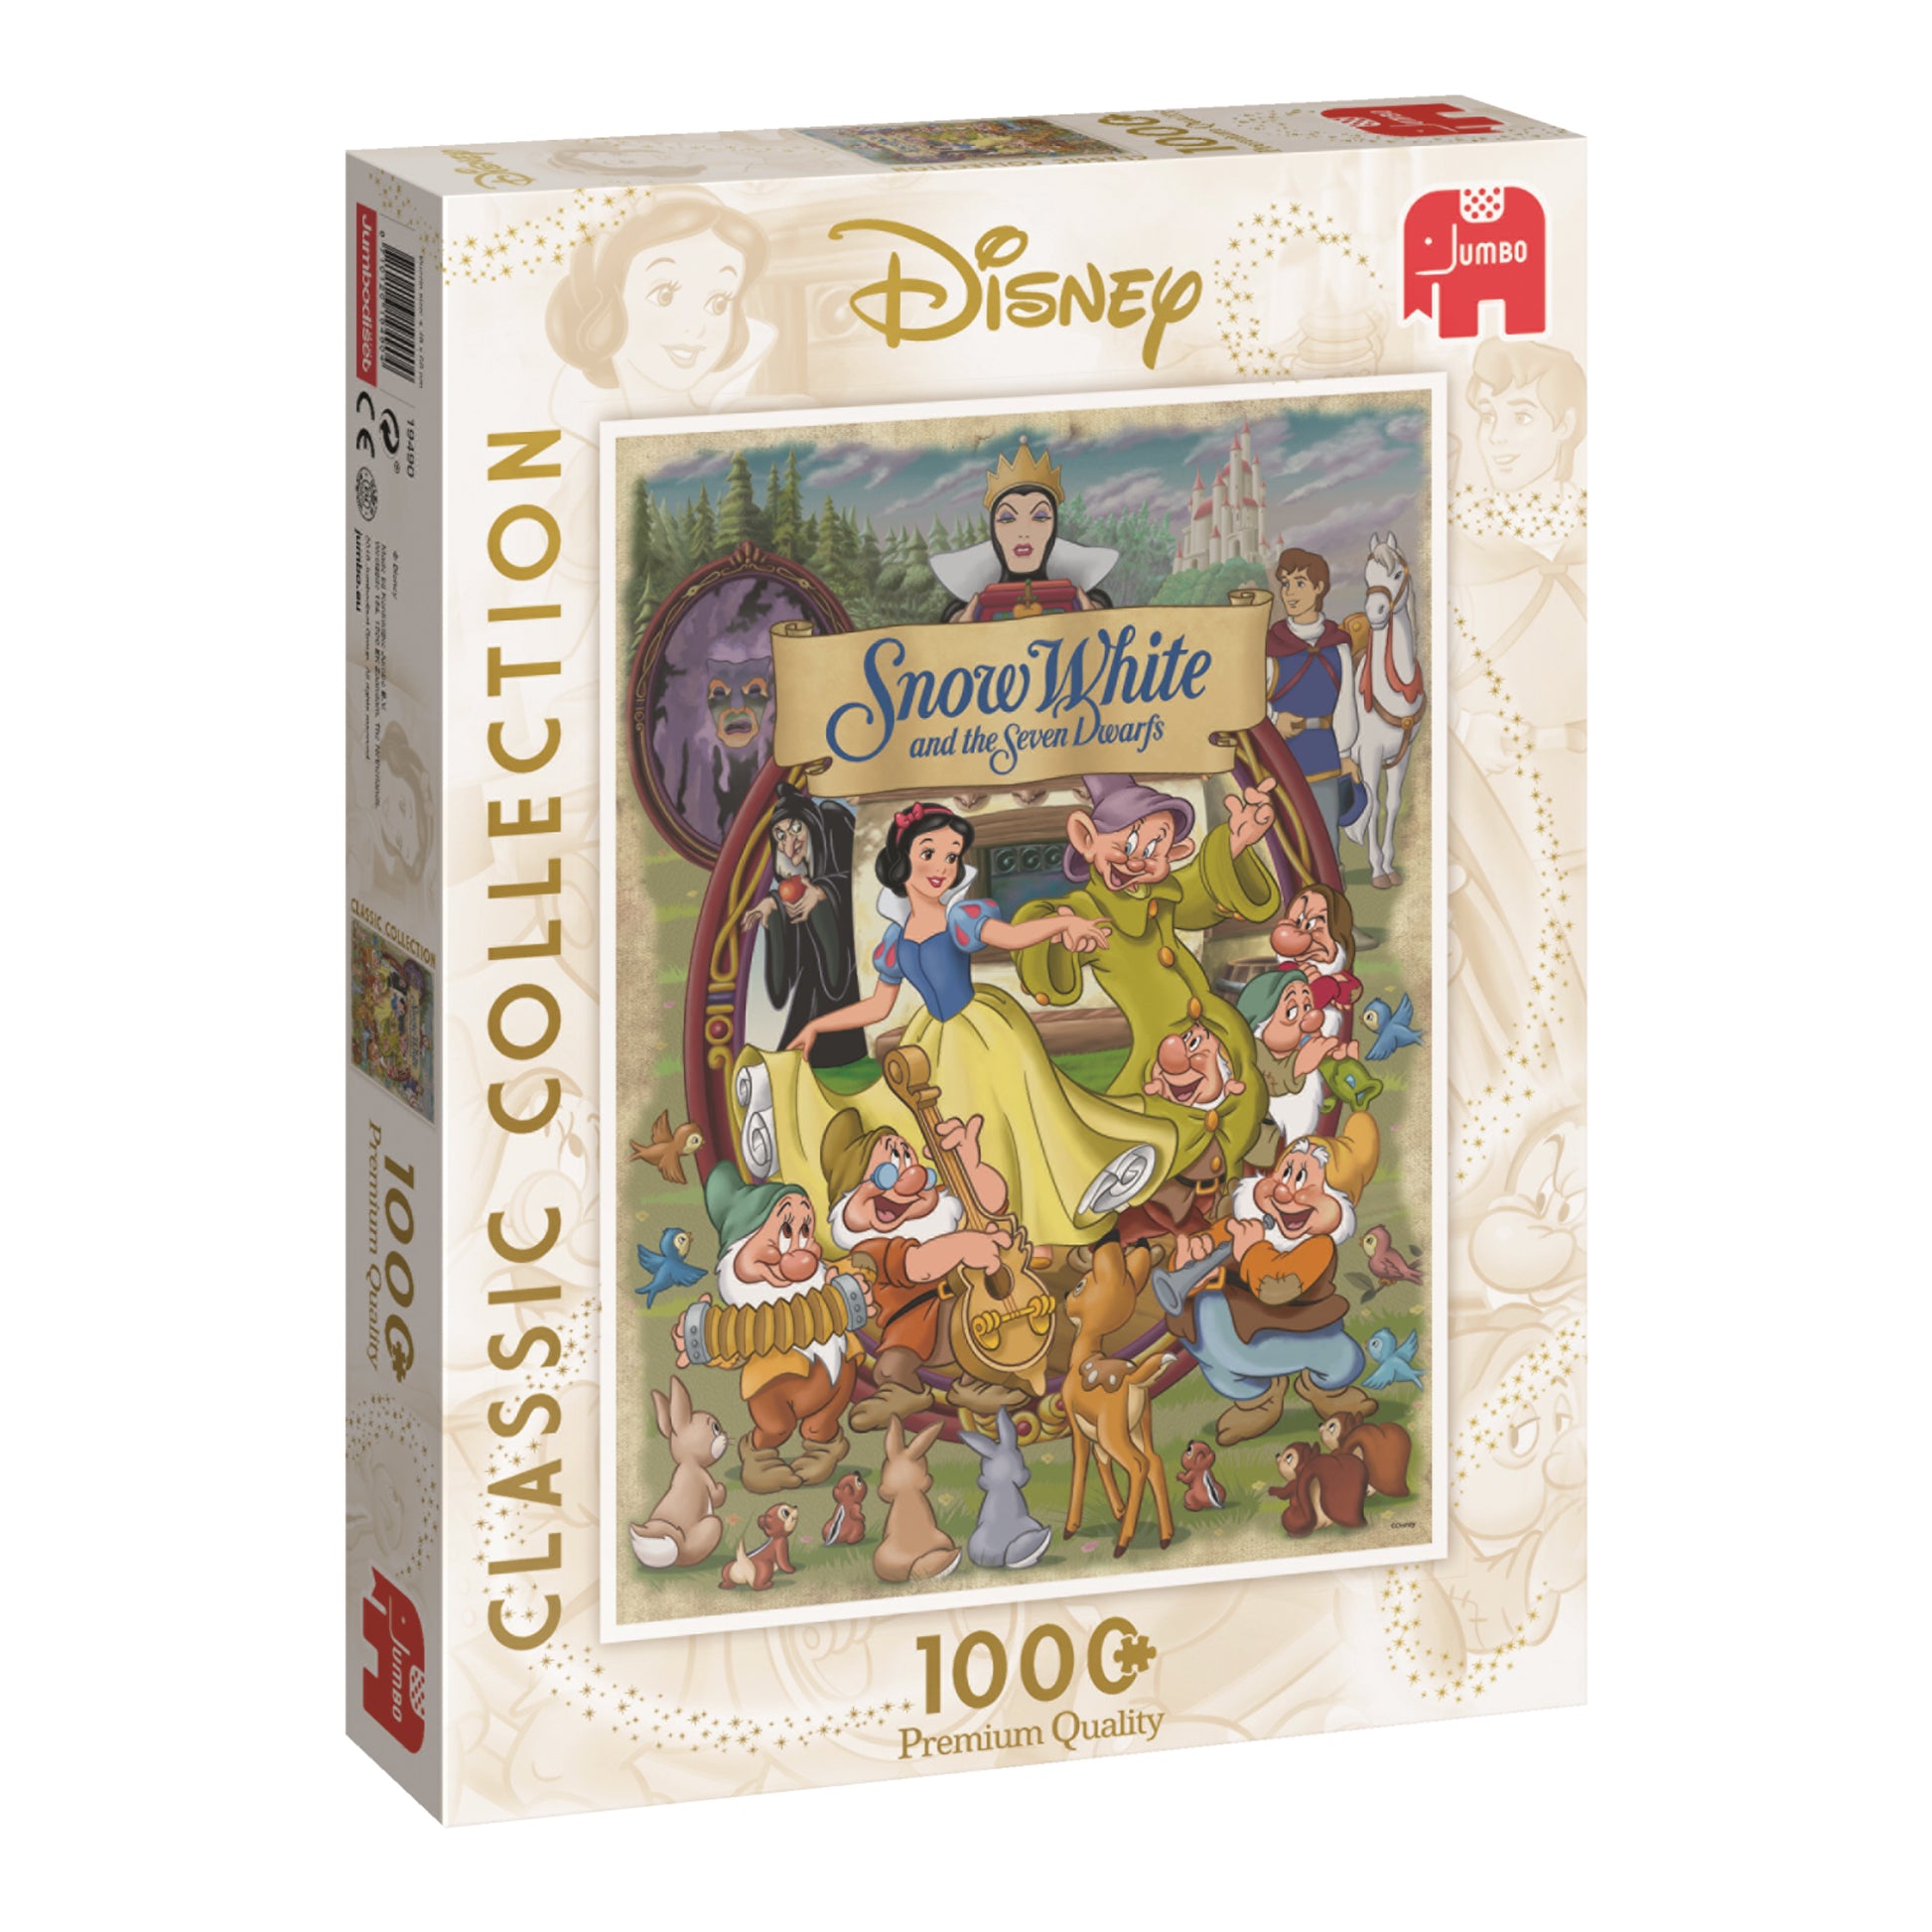 **Disney Classic Movie Poster Puzzle Snow White 1000 pcs - product image - Jumboplay.com